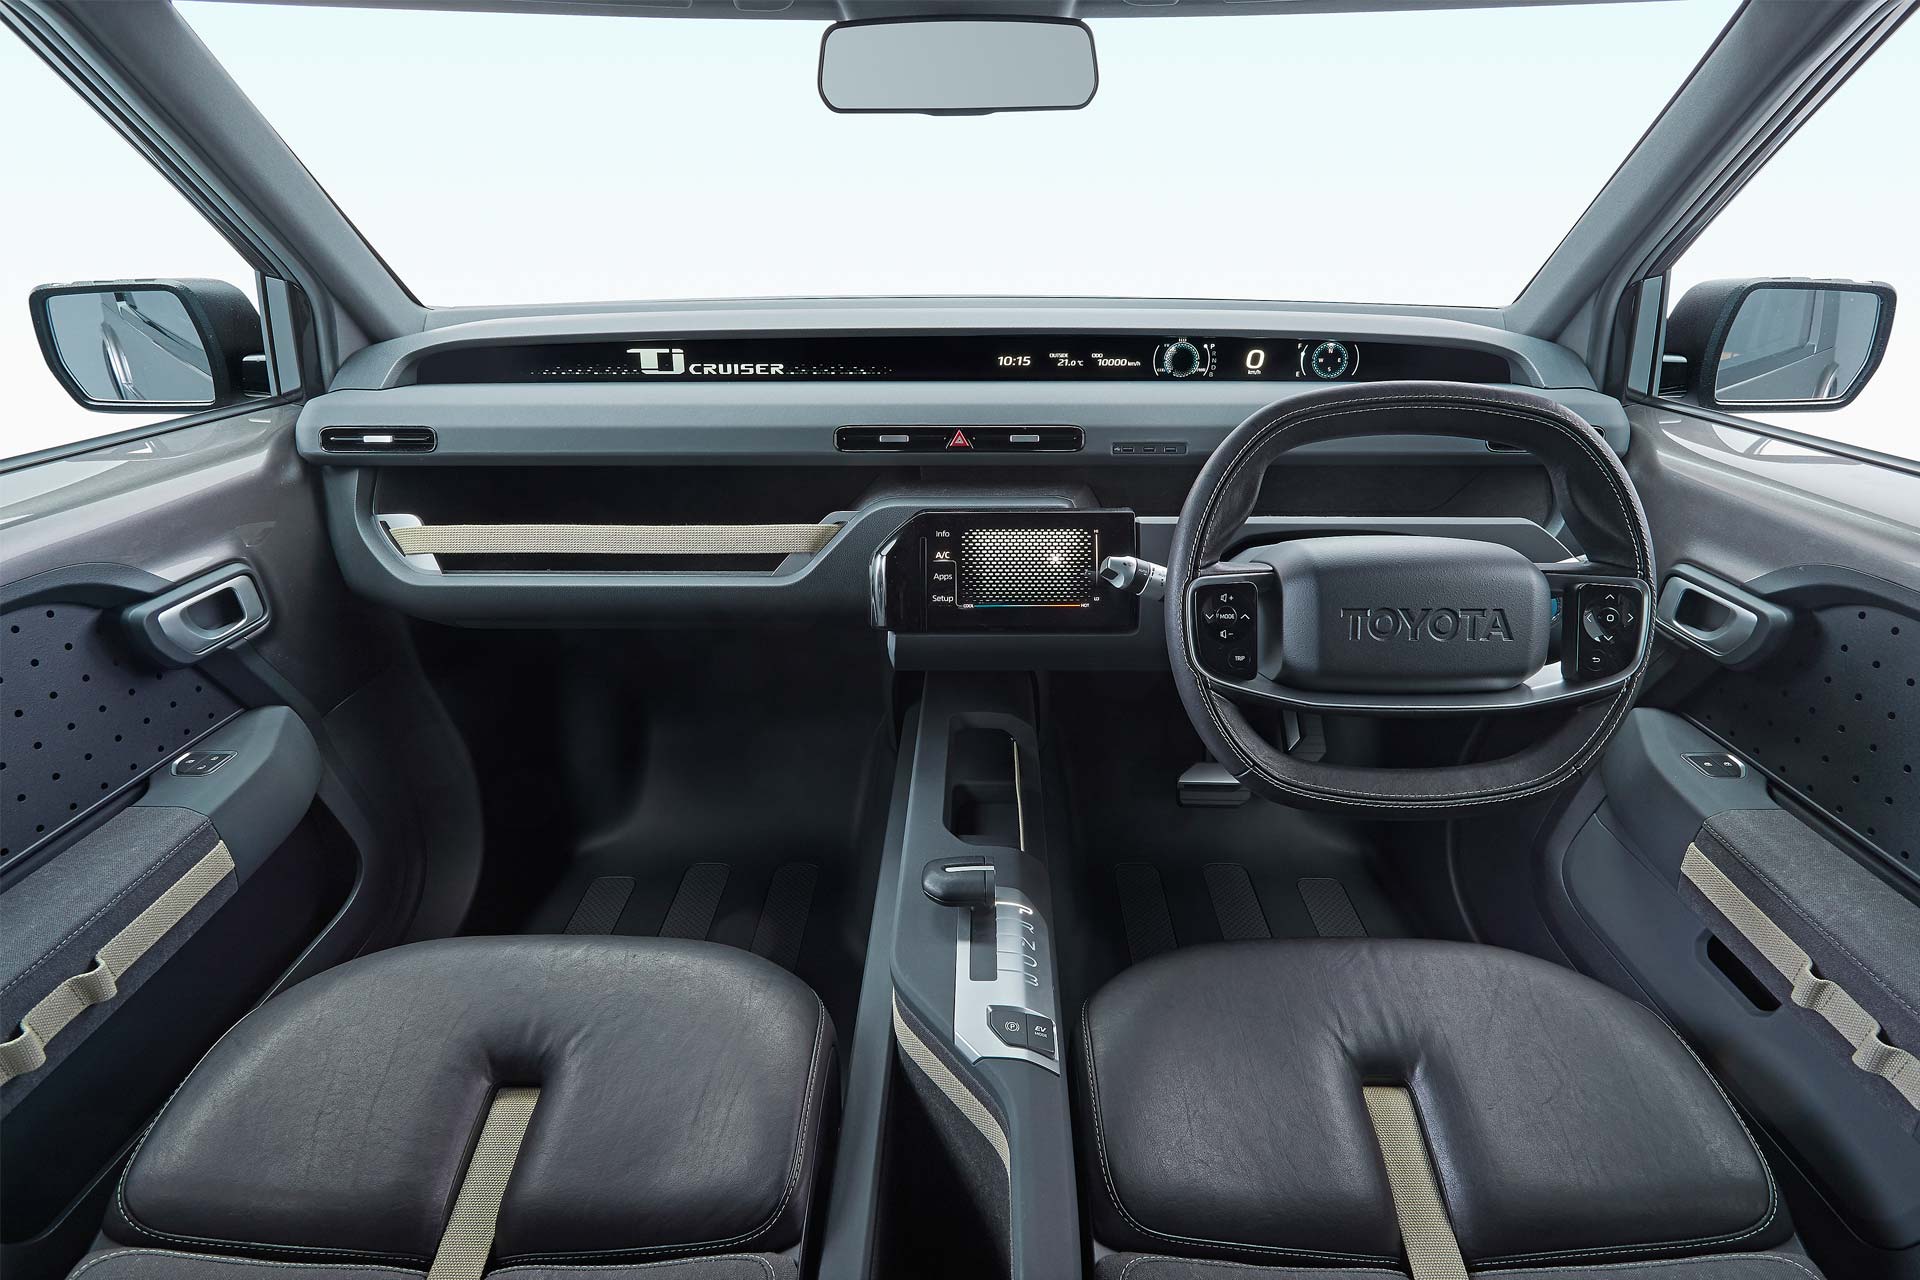 Toyota-TJ-Cruiser-concept-interior